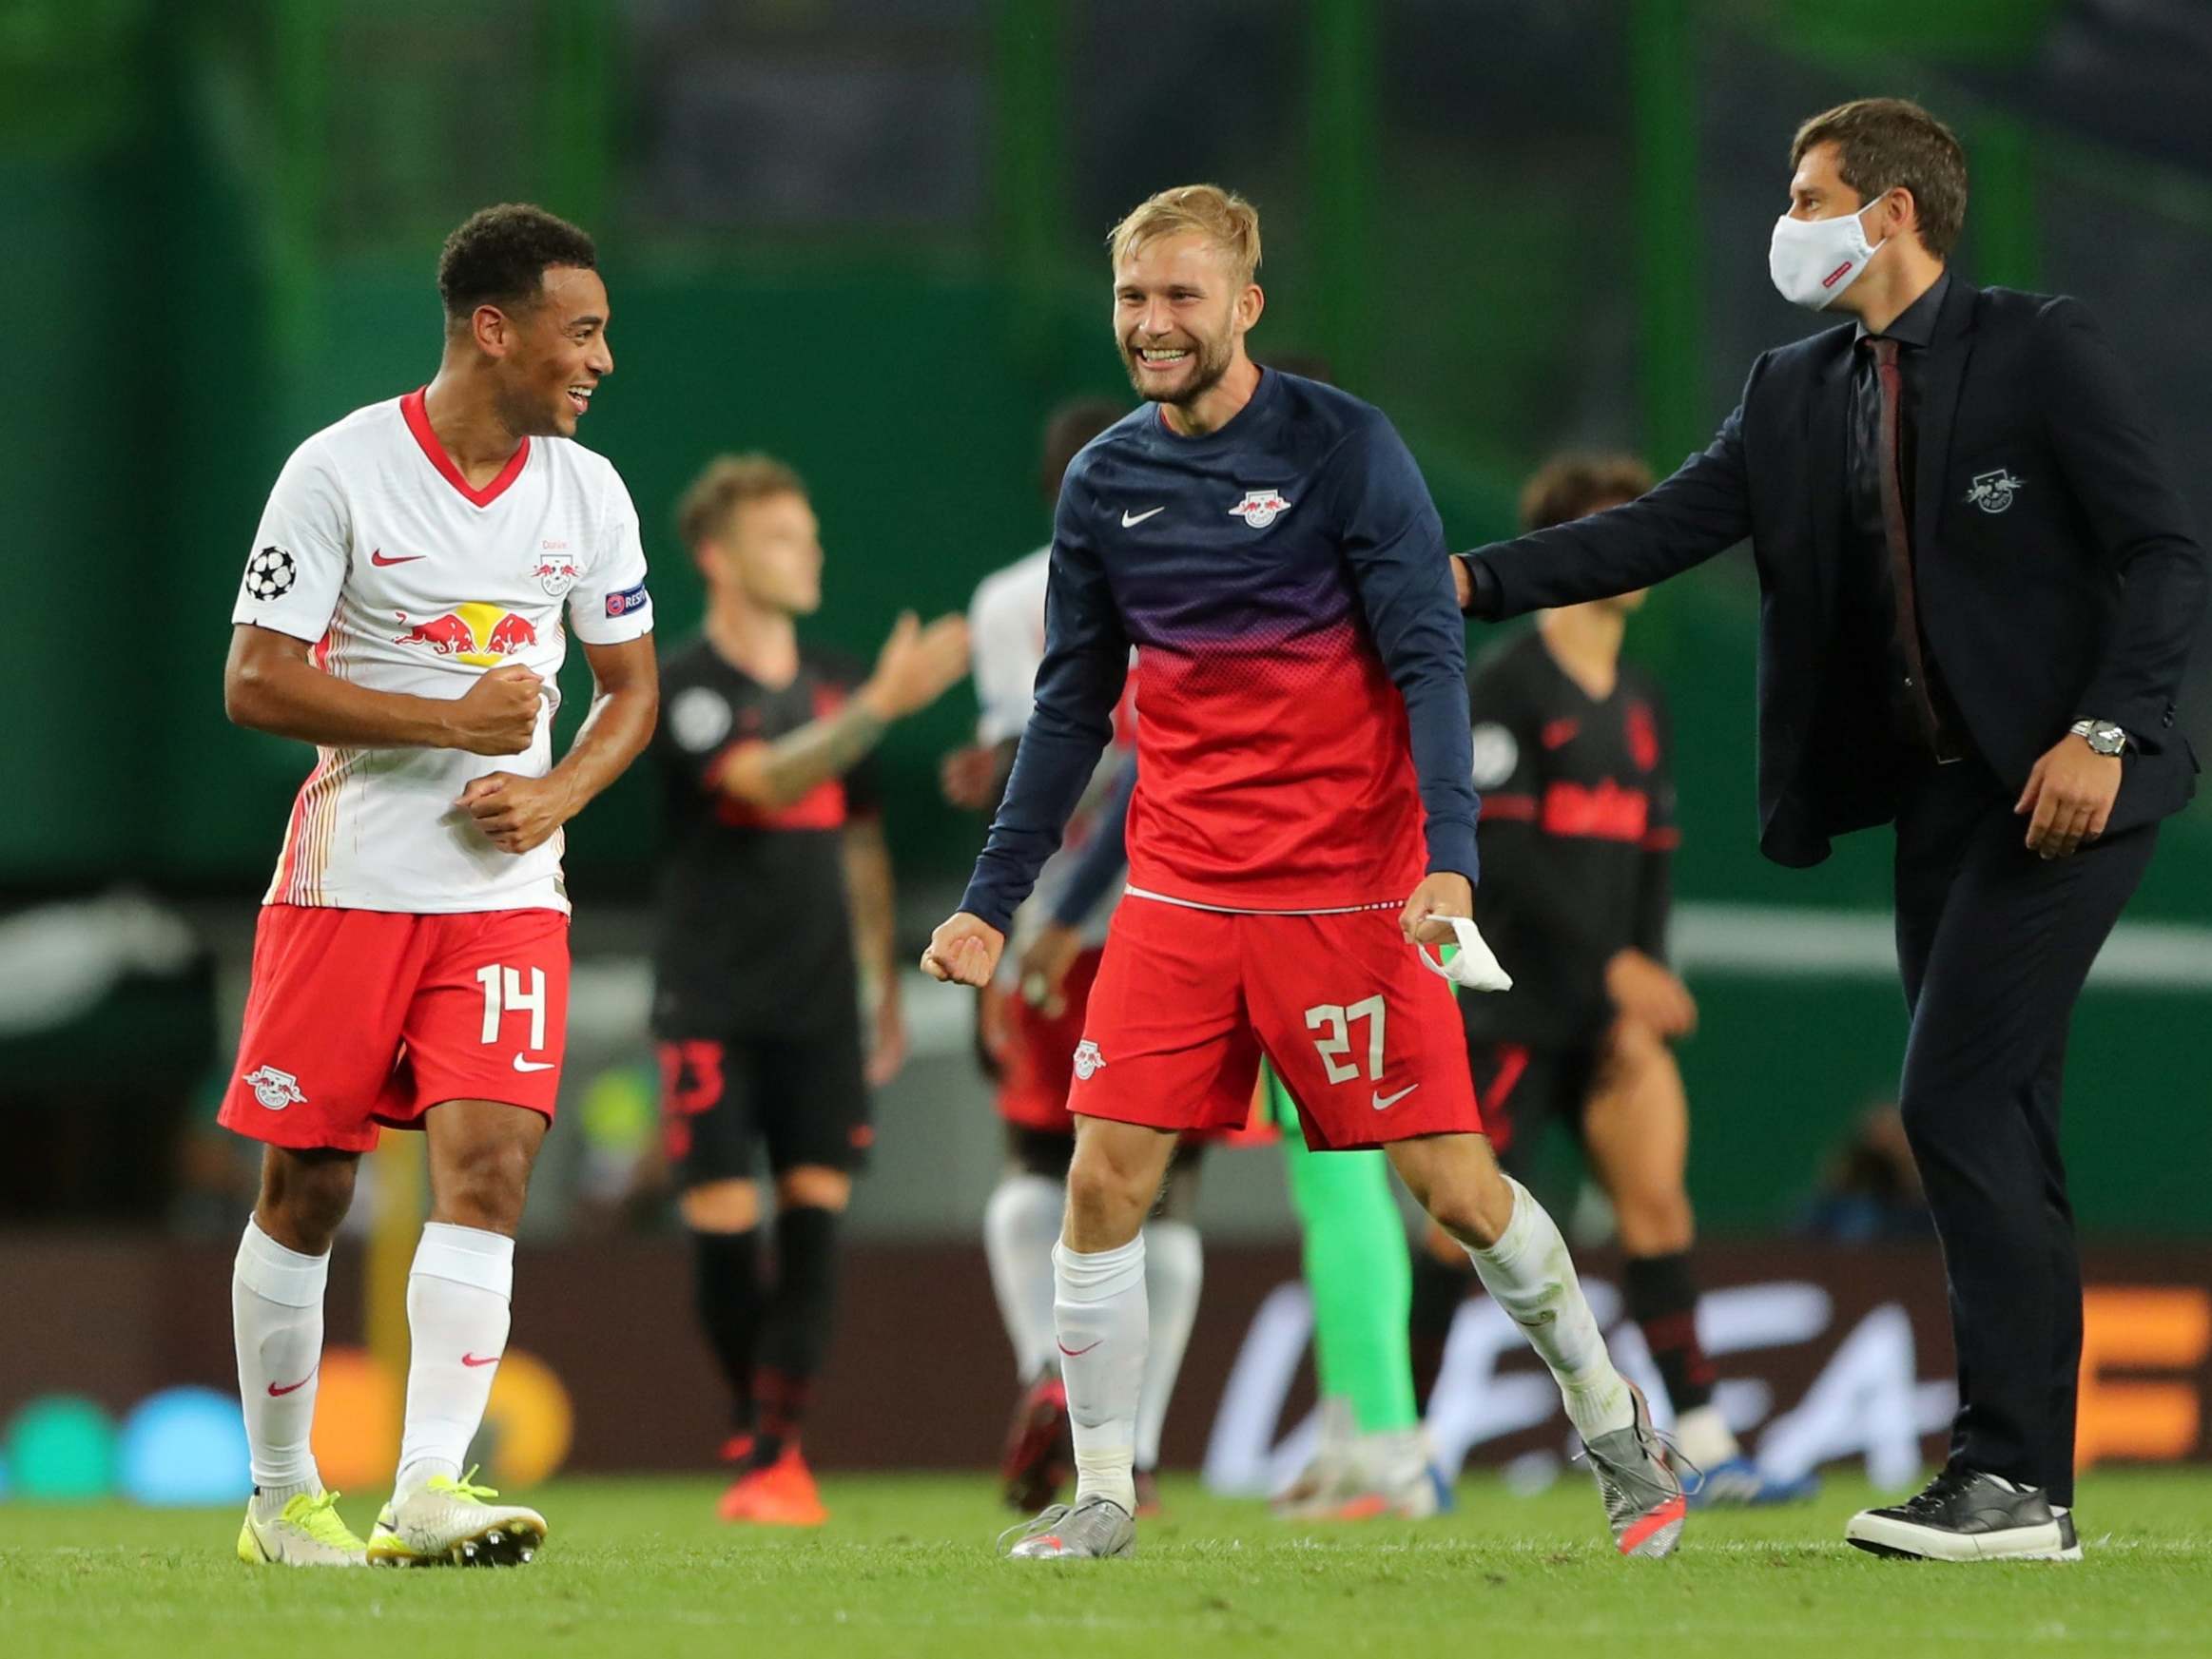 Julian Nagelsmann wins tactical battle against Diego Simeone to send Leipzig to Champions League semis